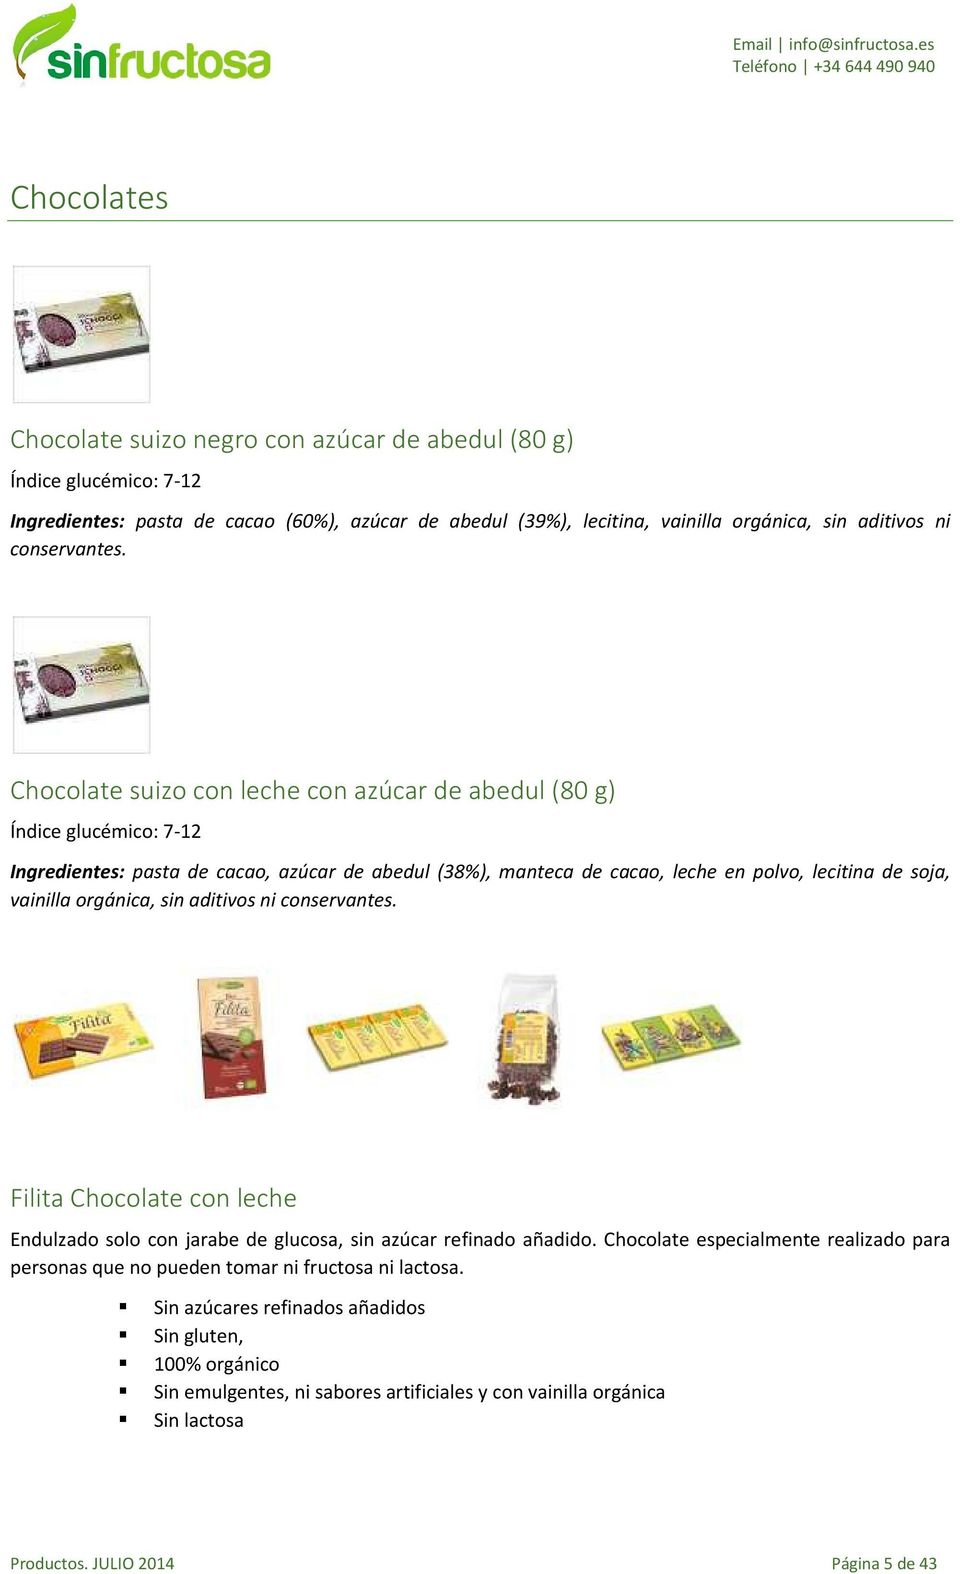 Chocolate suizo con leche con azúcar de abedul (8) Índice glucémico: 7-12 Ingredientes: pasta de cacao, azúcar de abedul (38%), manteca de cacao, leche en polvo, lecitina de soja, vainilla